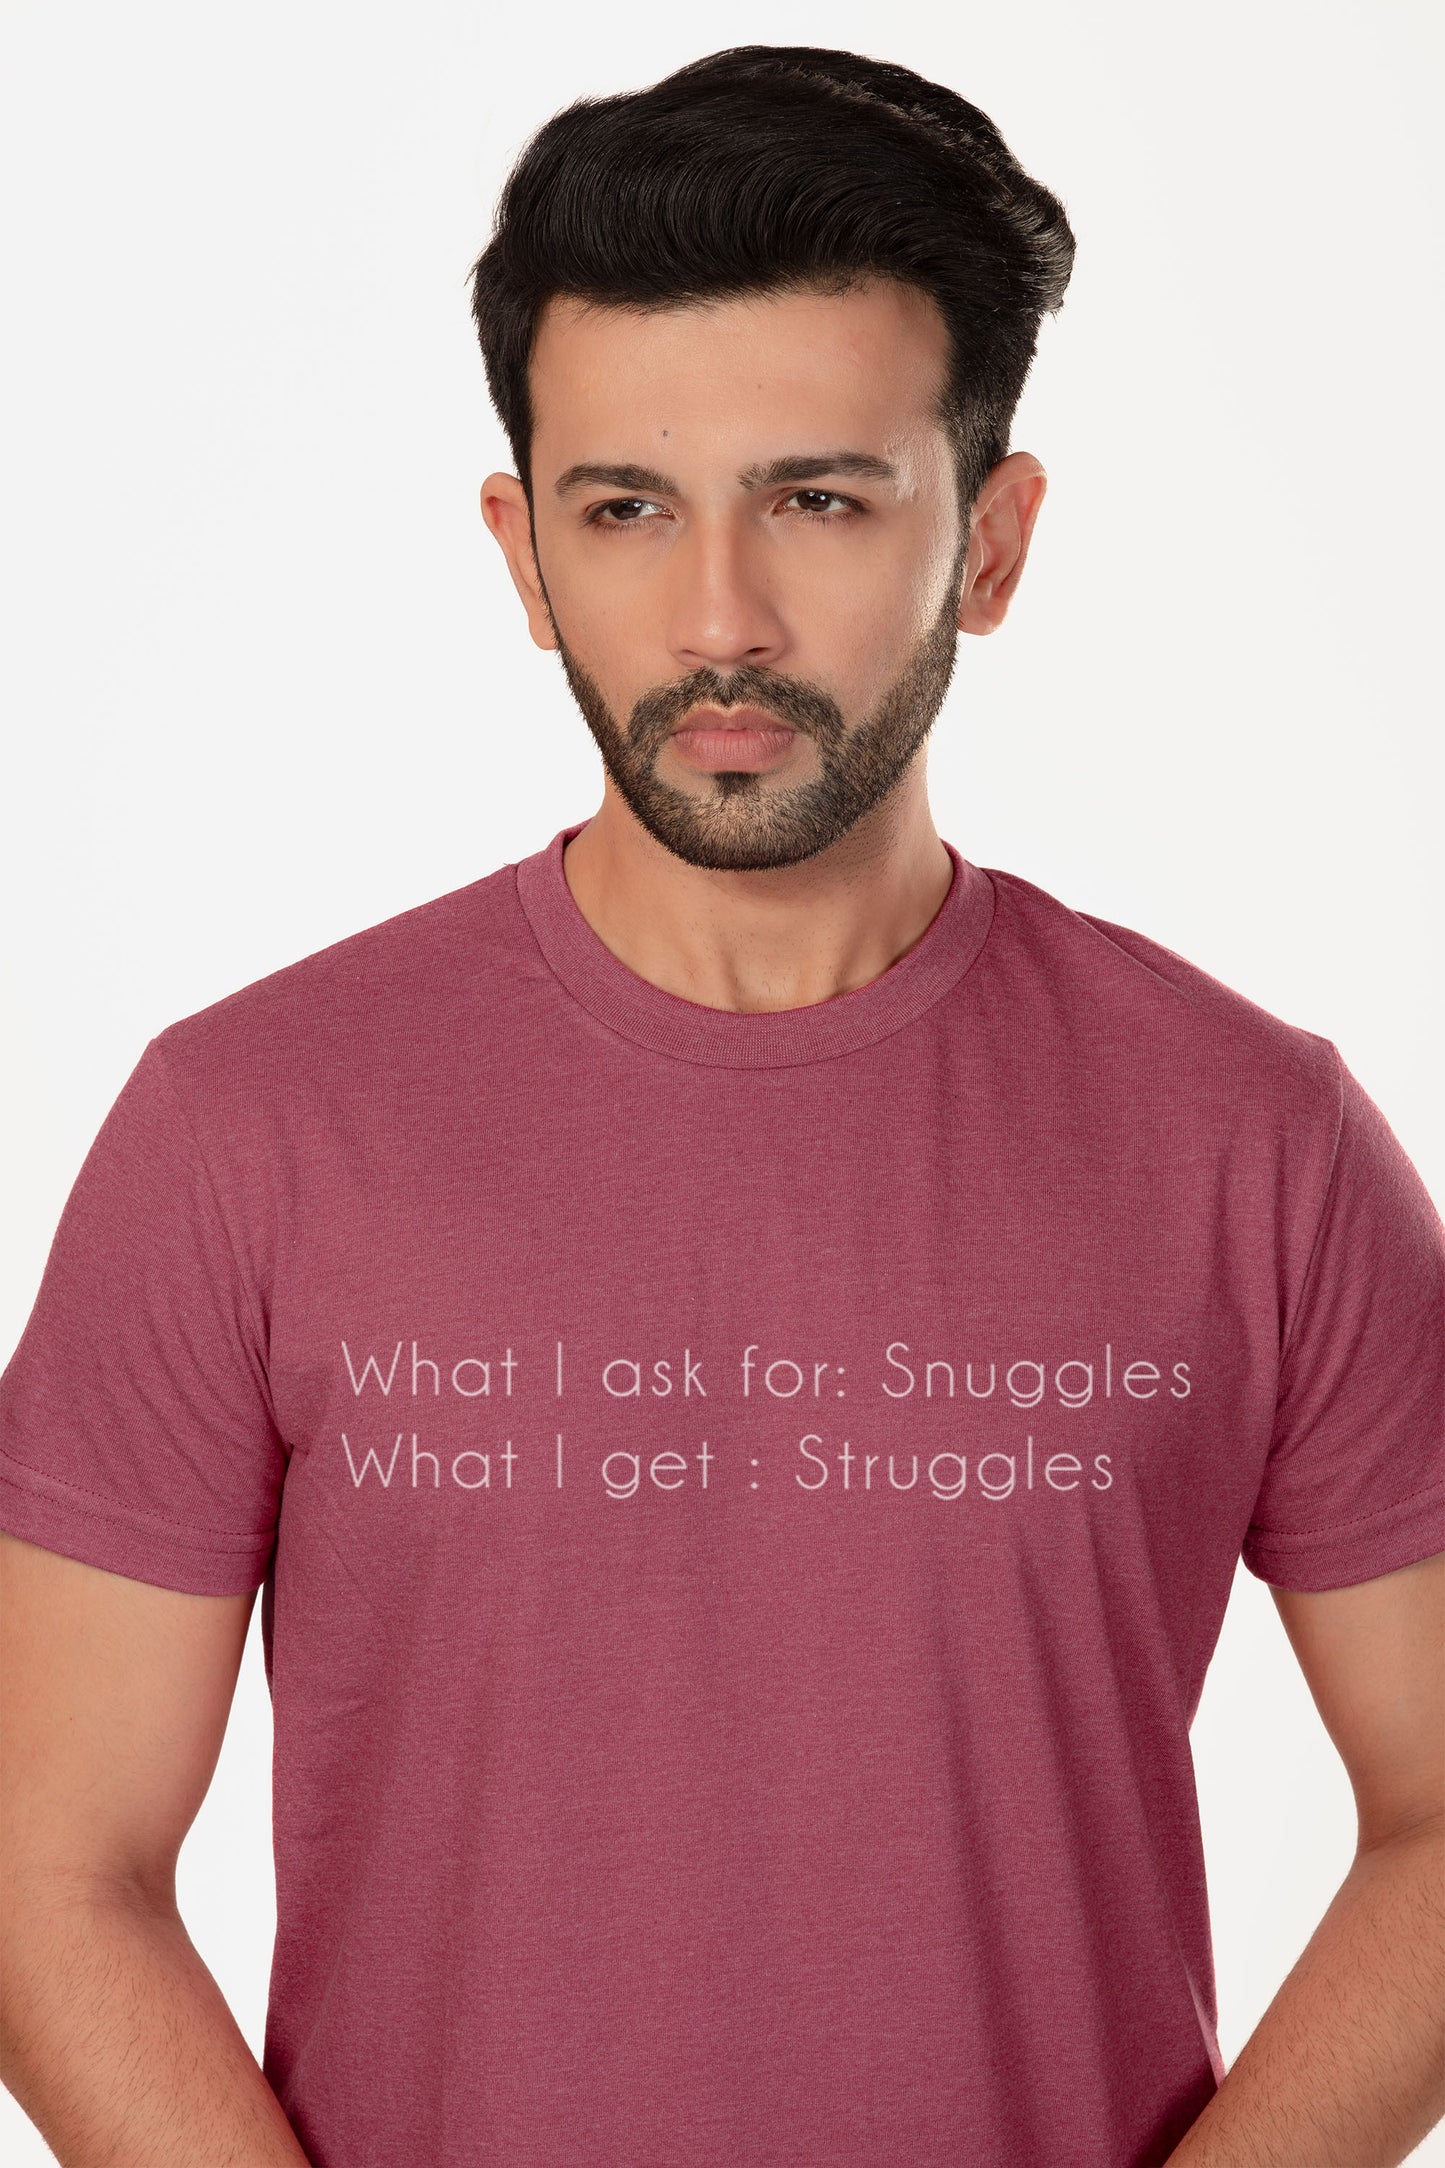 Struggles - Melange Cotton T-shirt - keos.life